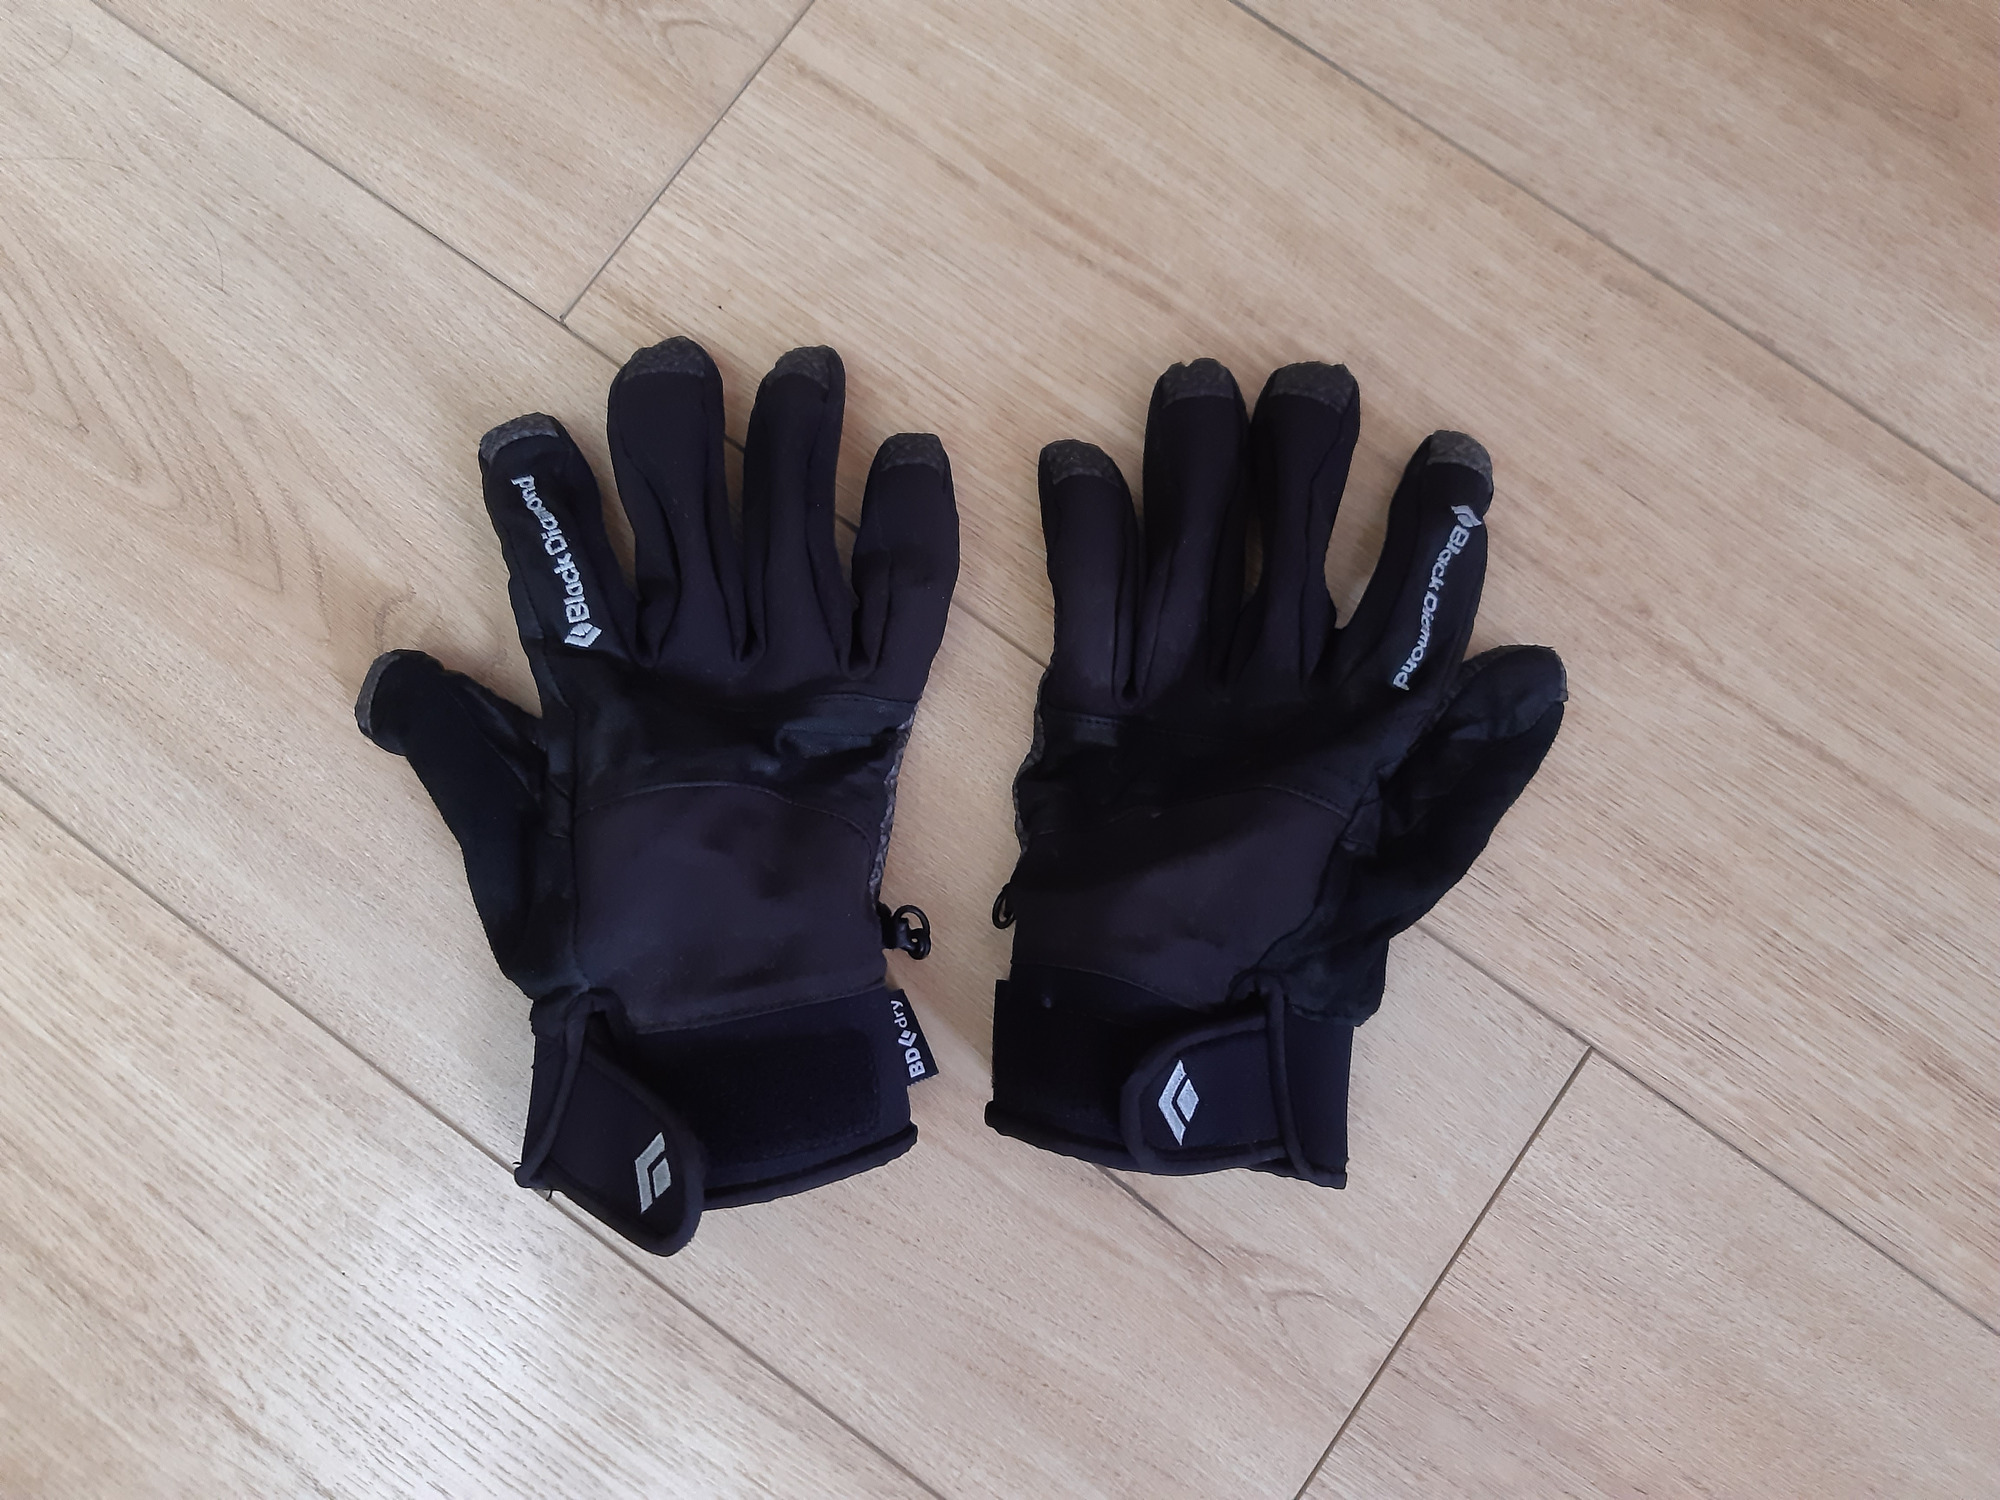 Black Diamond Arc gloves